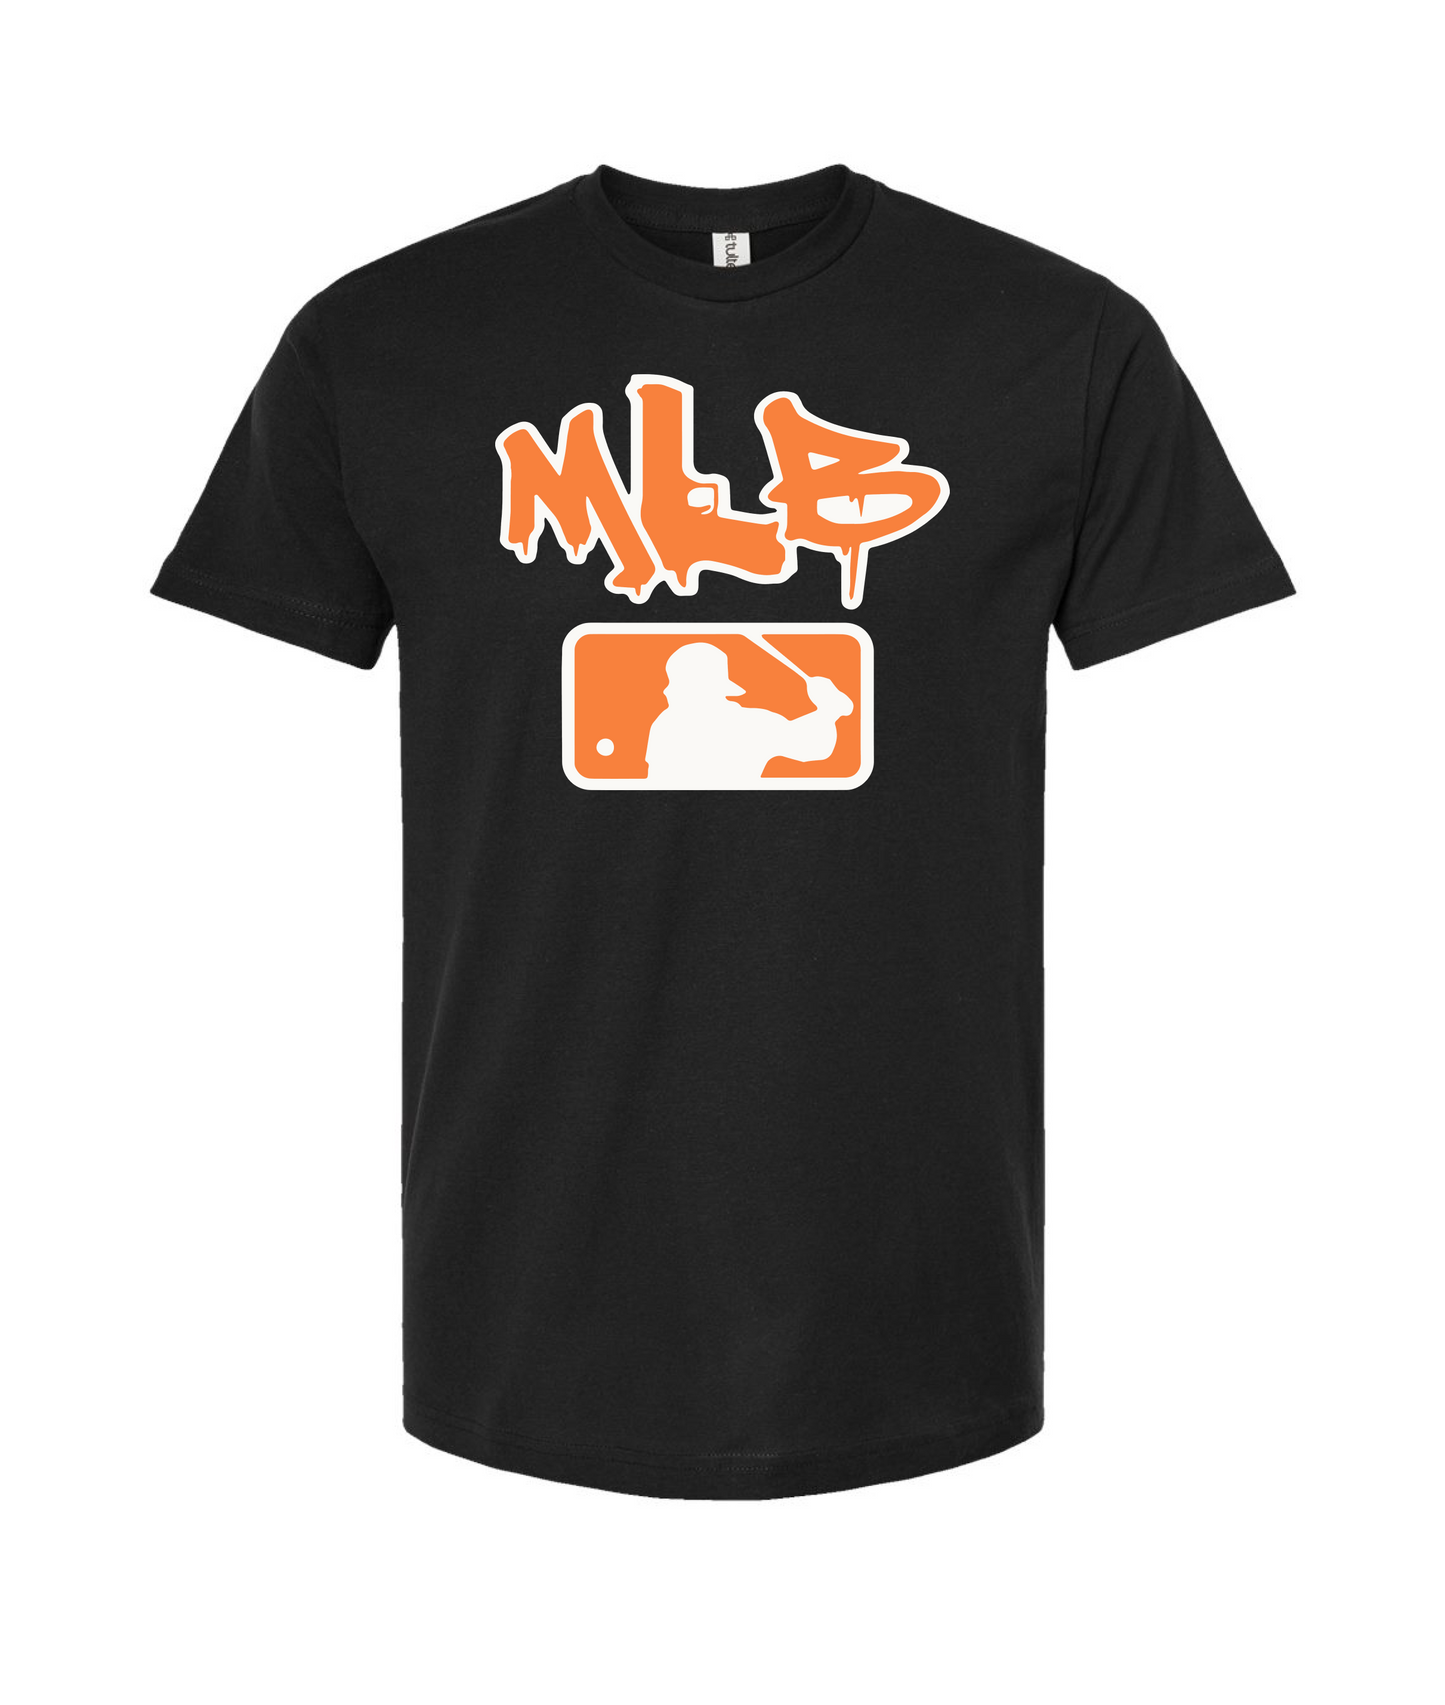 More Like Brothers Apparel - MLB Orange - Black T-Shirt